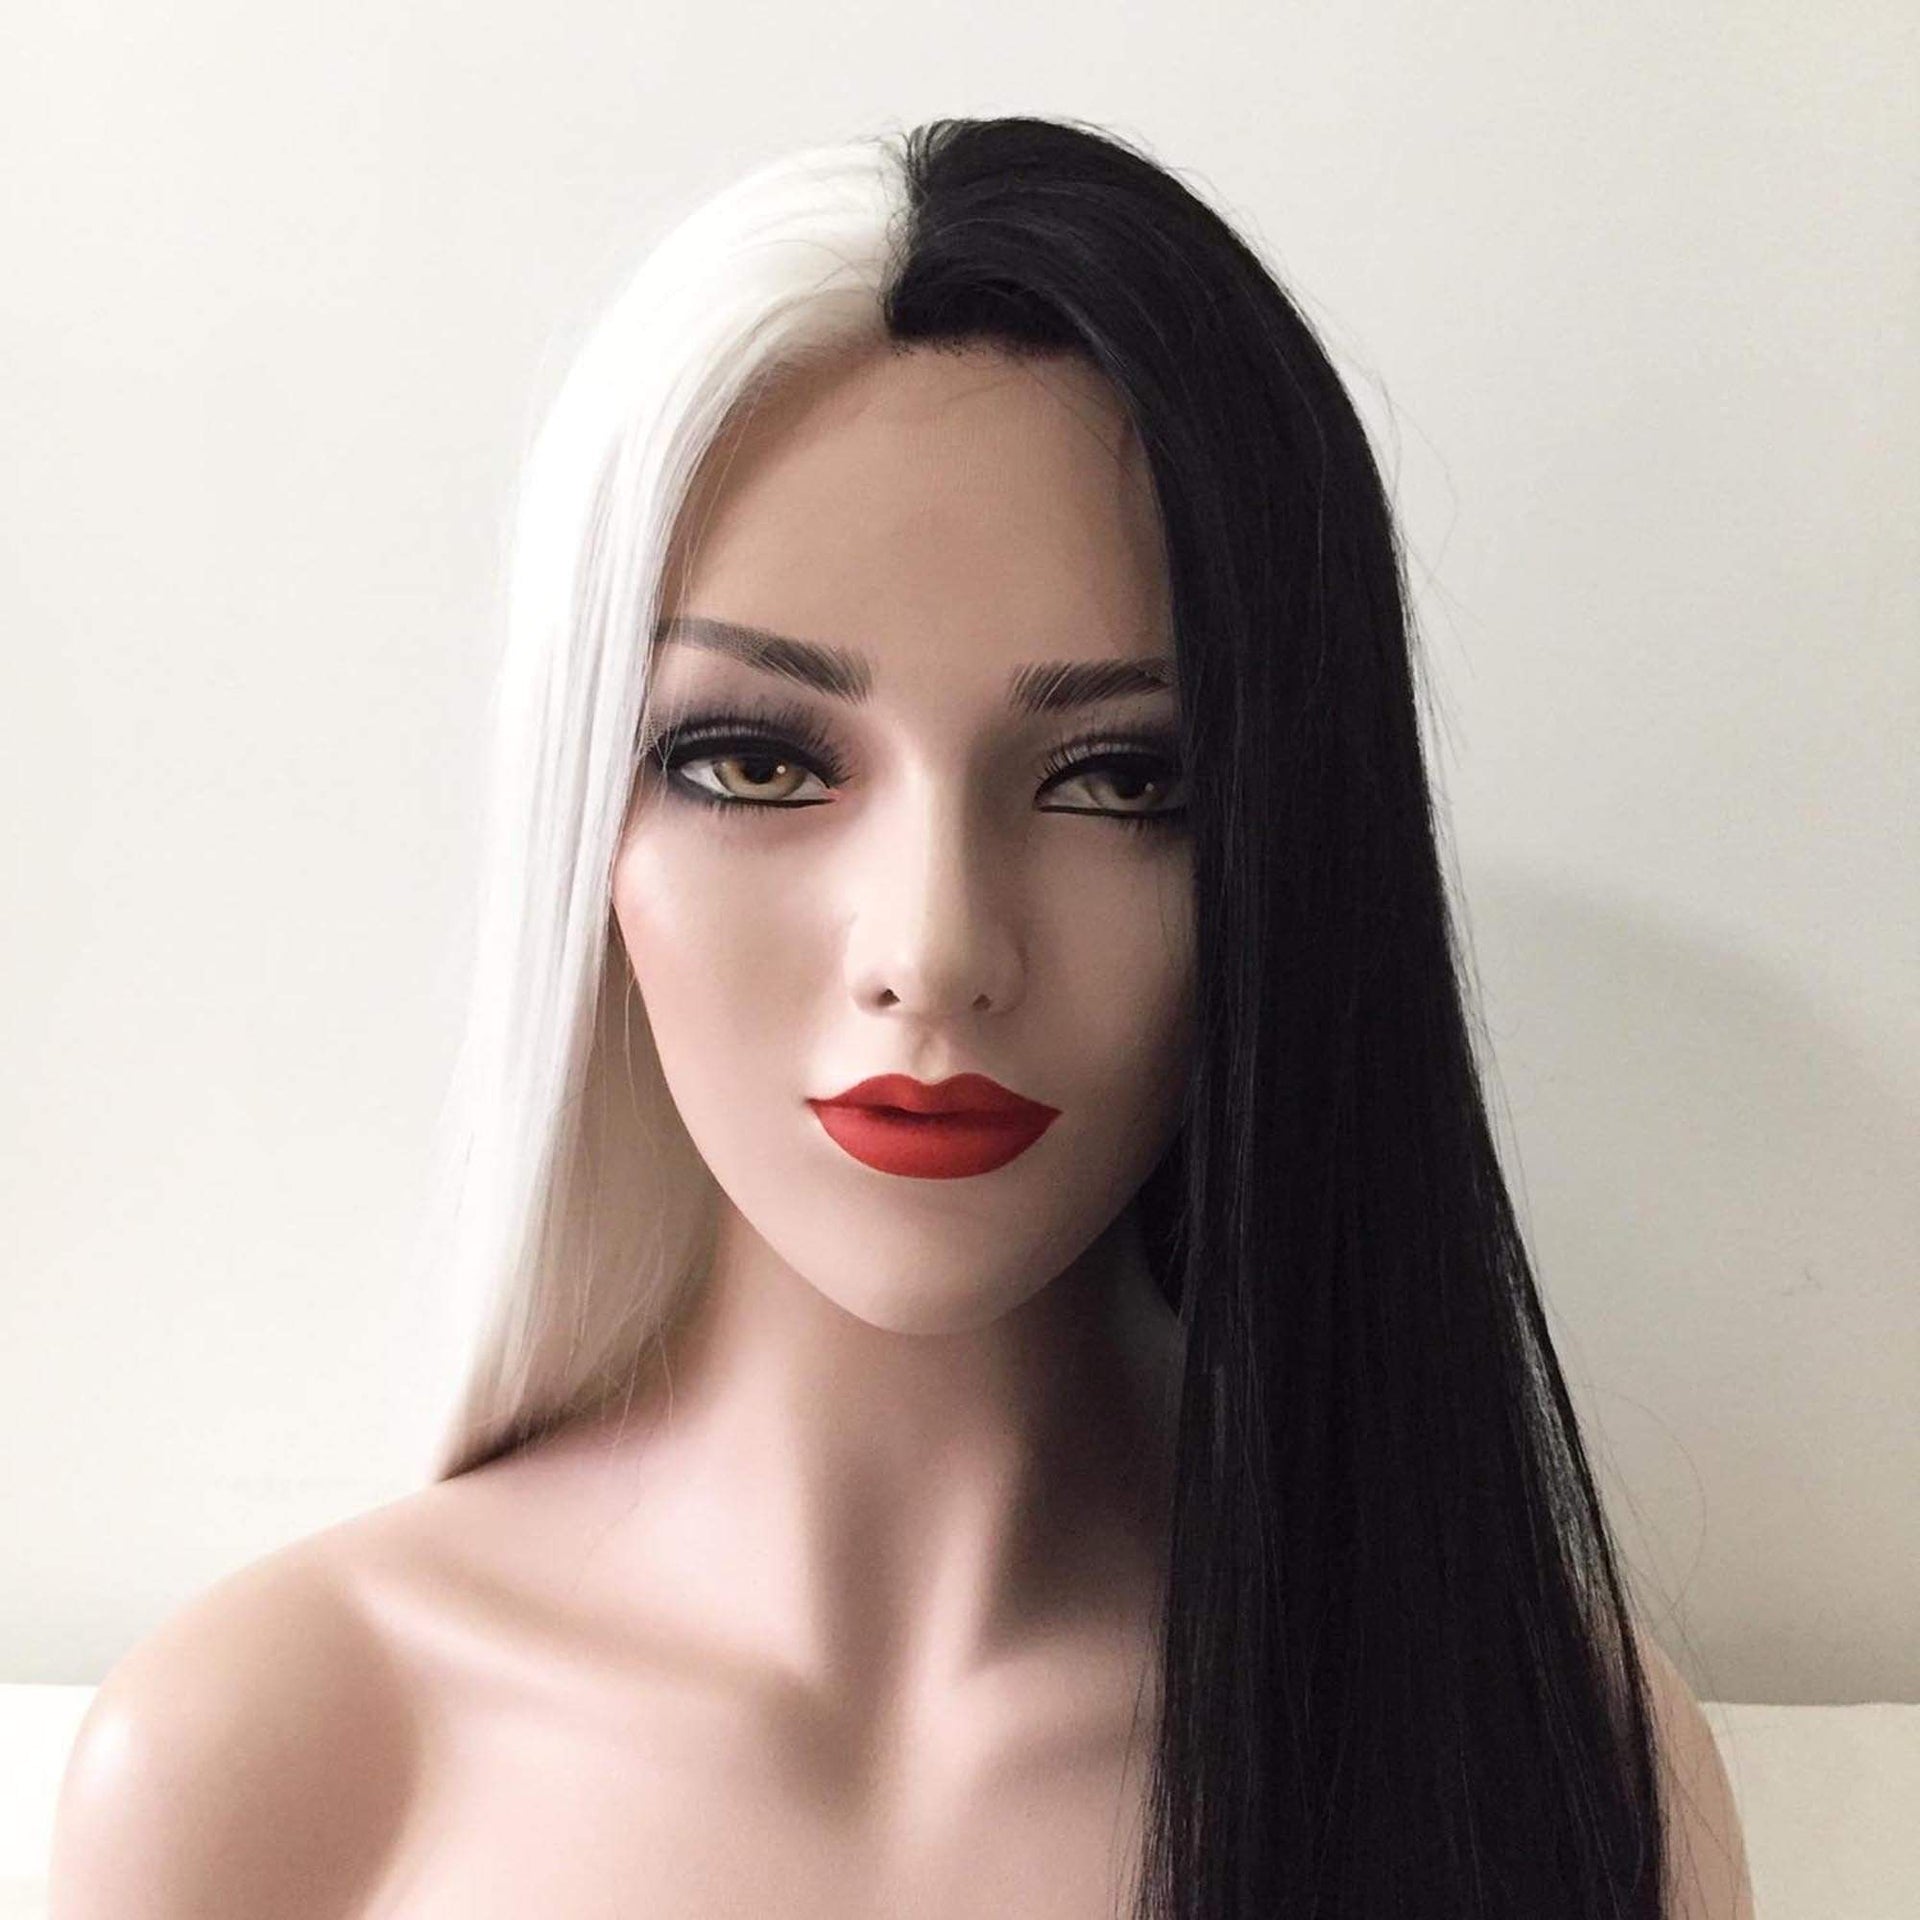 nevermindyrhead Women Lace Front Split Colors Black White Long Straight Middle Part Wig